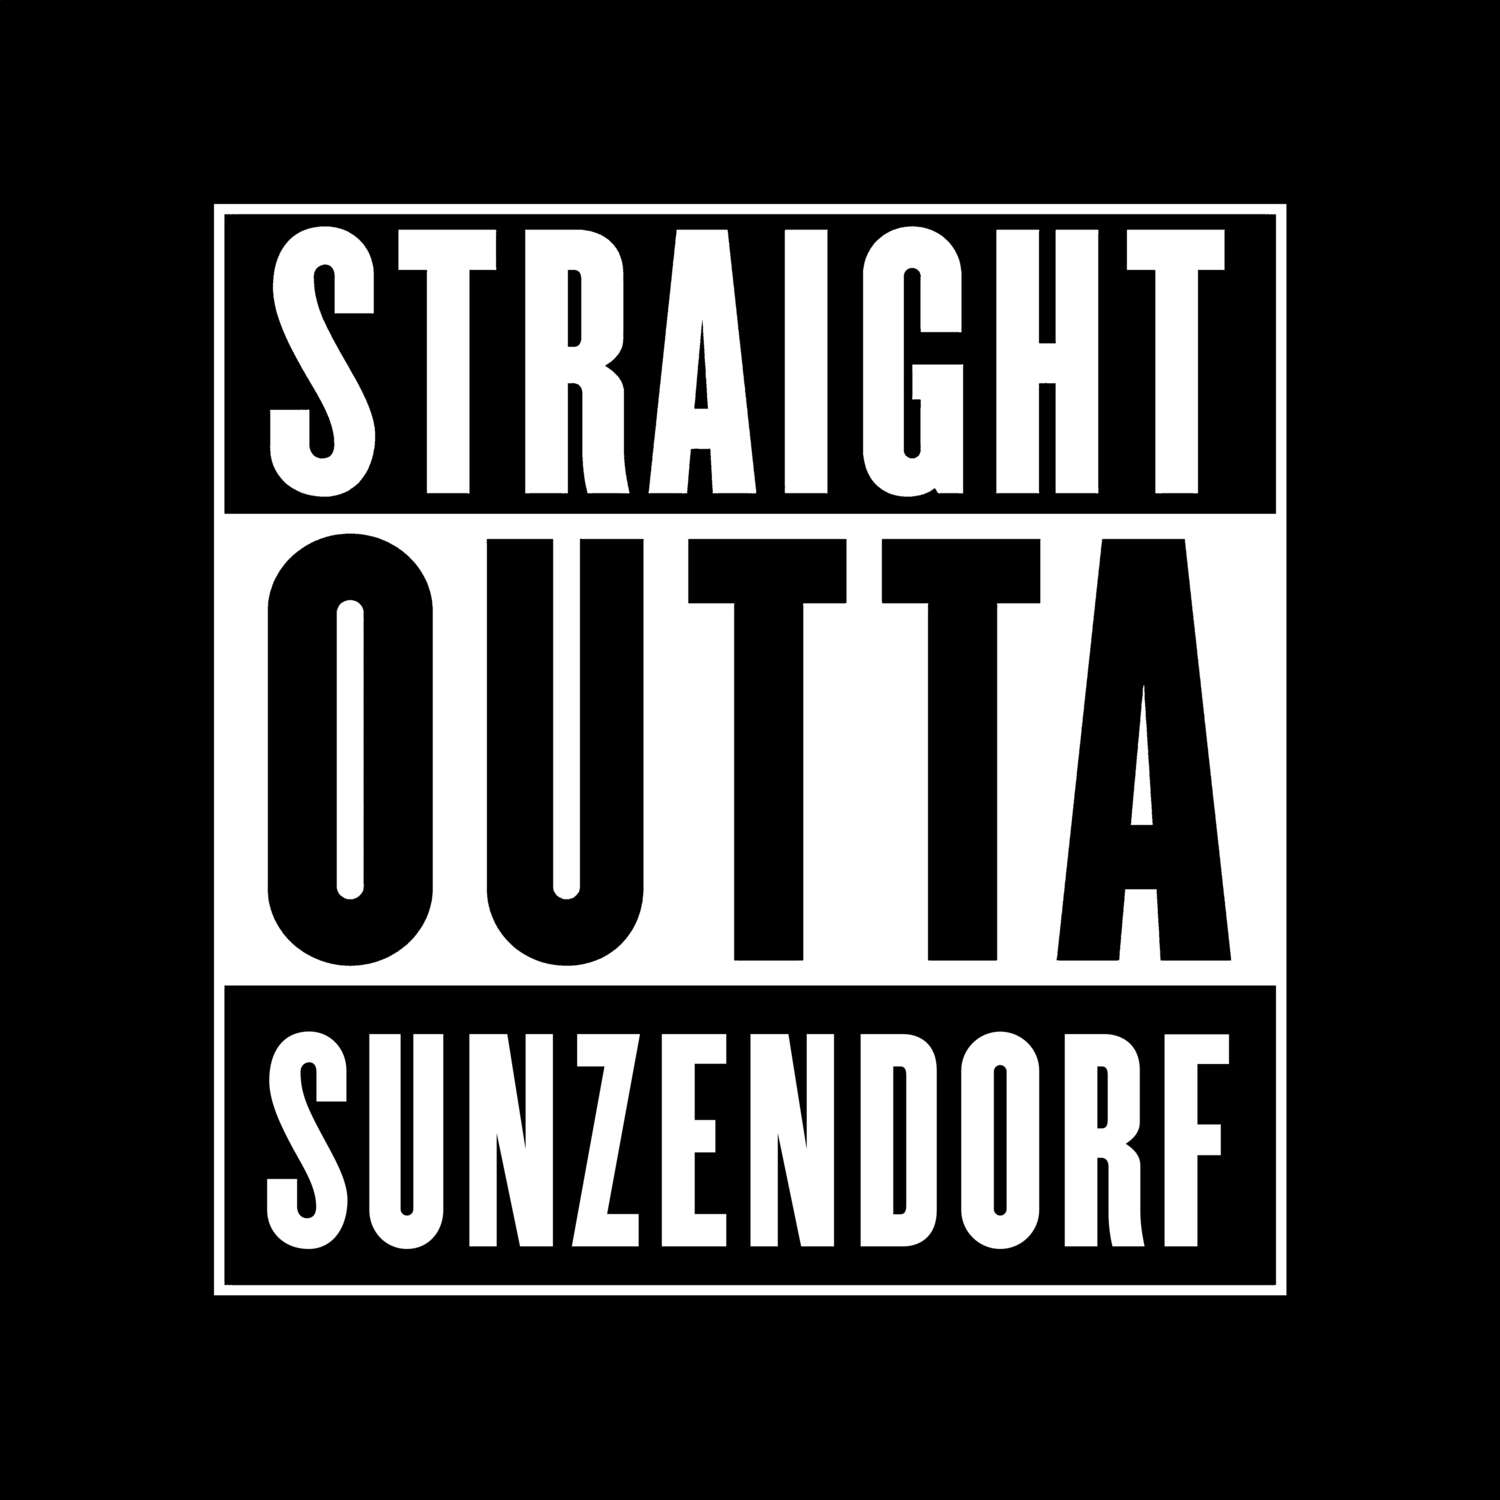 Sunzendorf T-Shirt »Straight Outta«